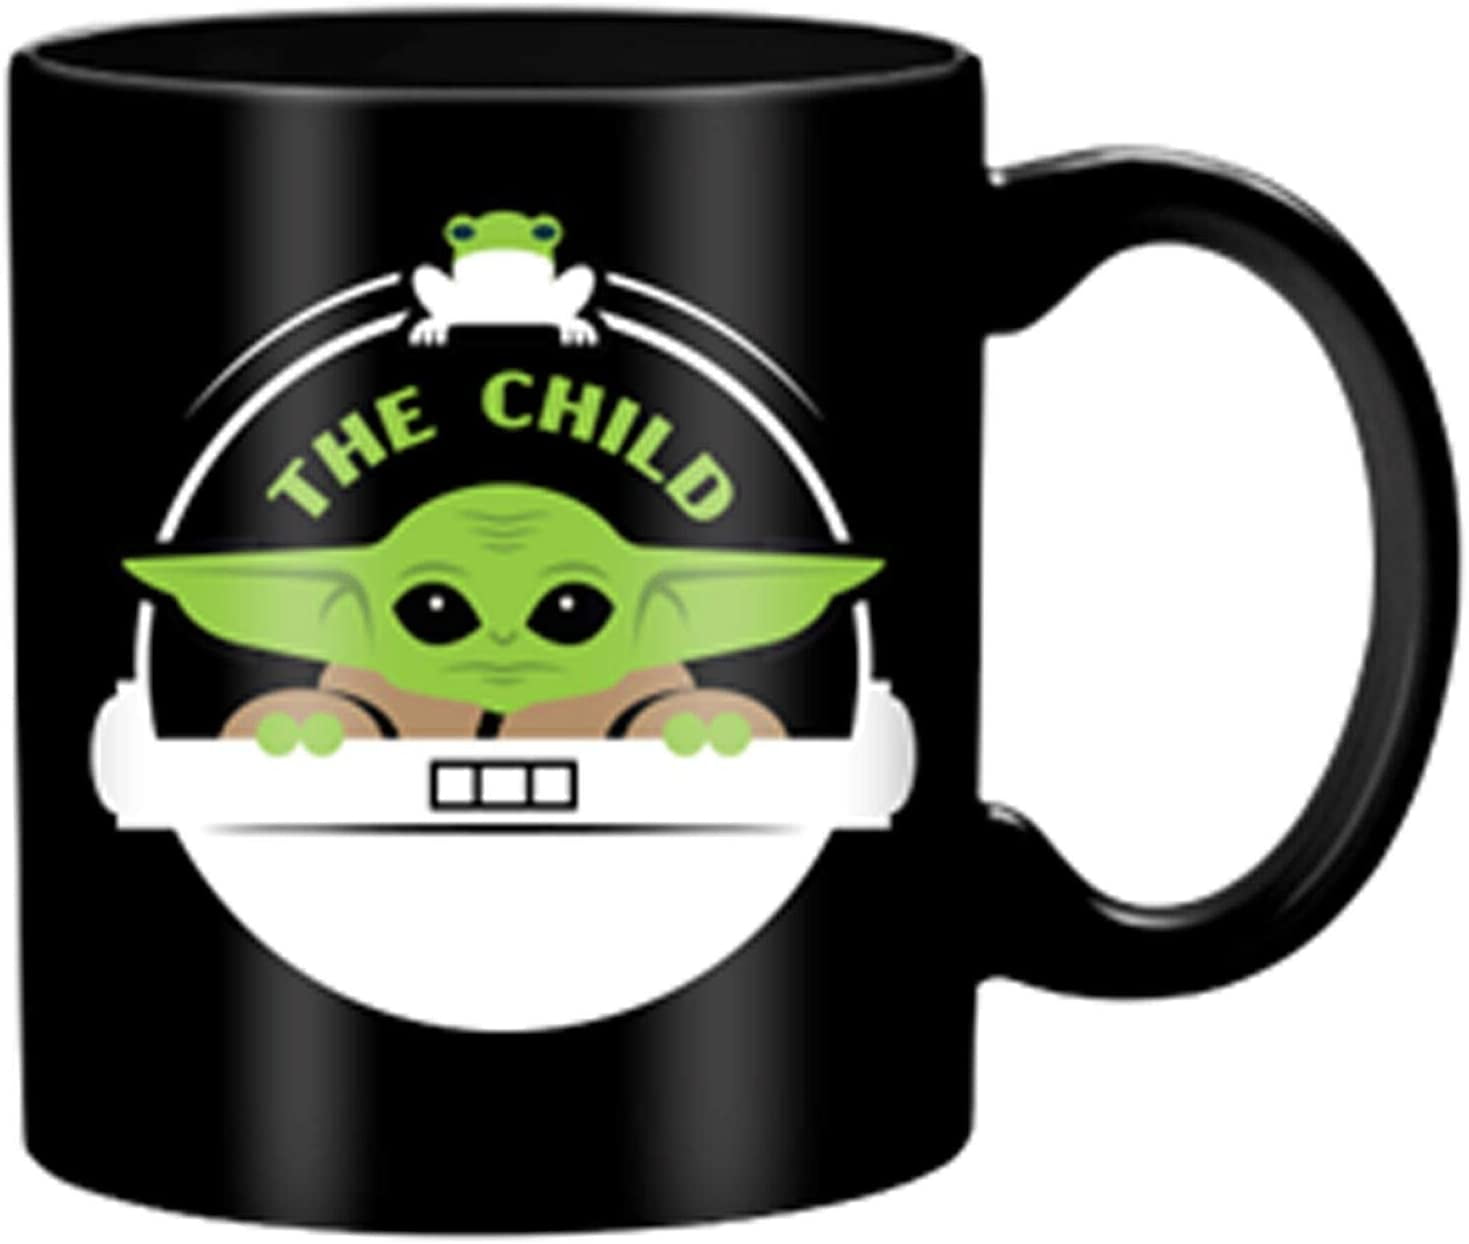 Star Wars The Mandalorian 14oz Ceramic Baby Yoda The Child Coffee Mug –  Hollywood Heroes